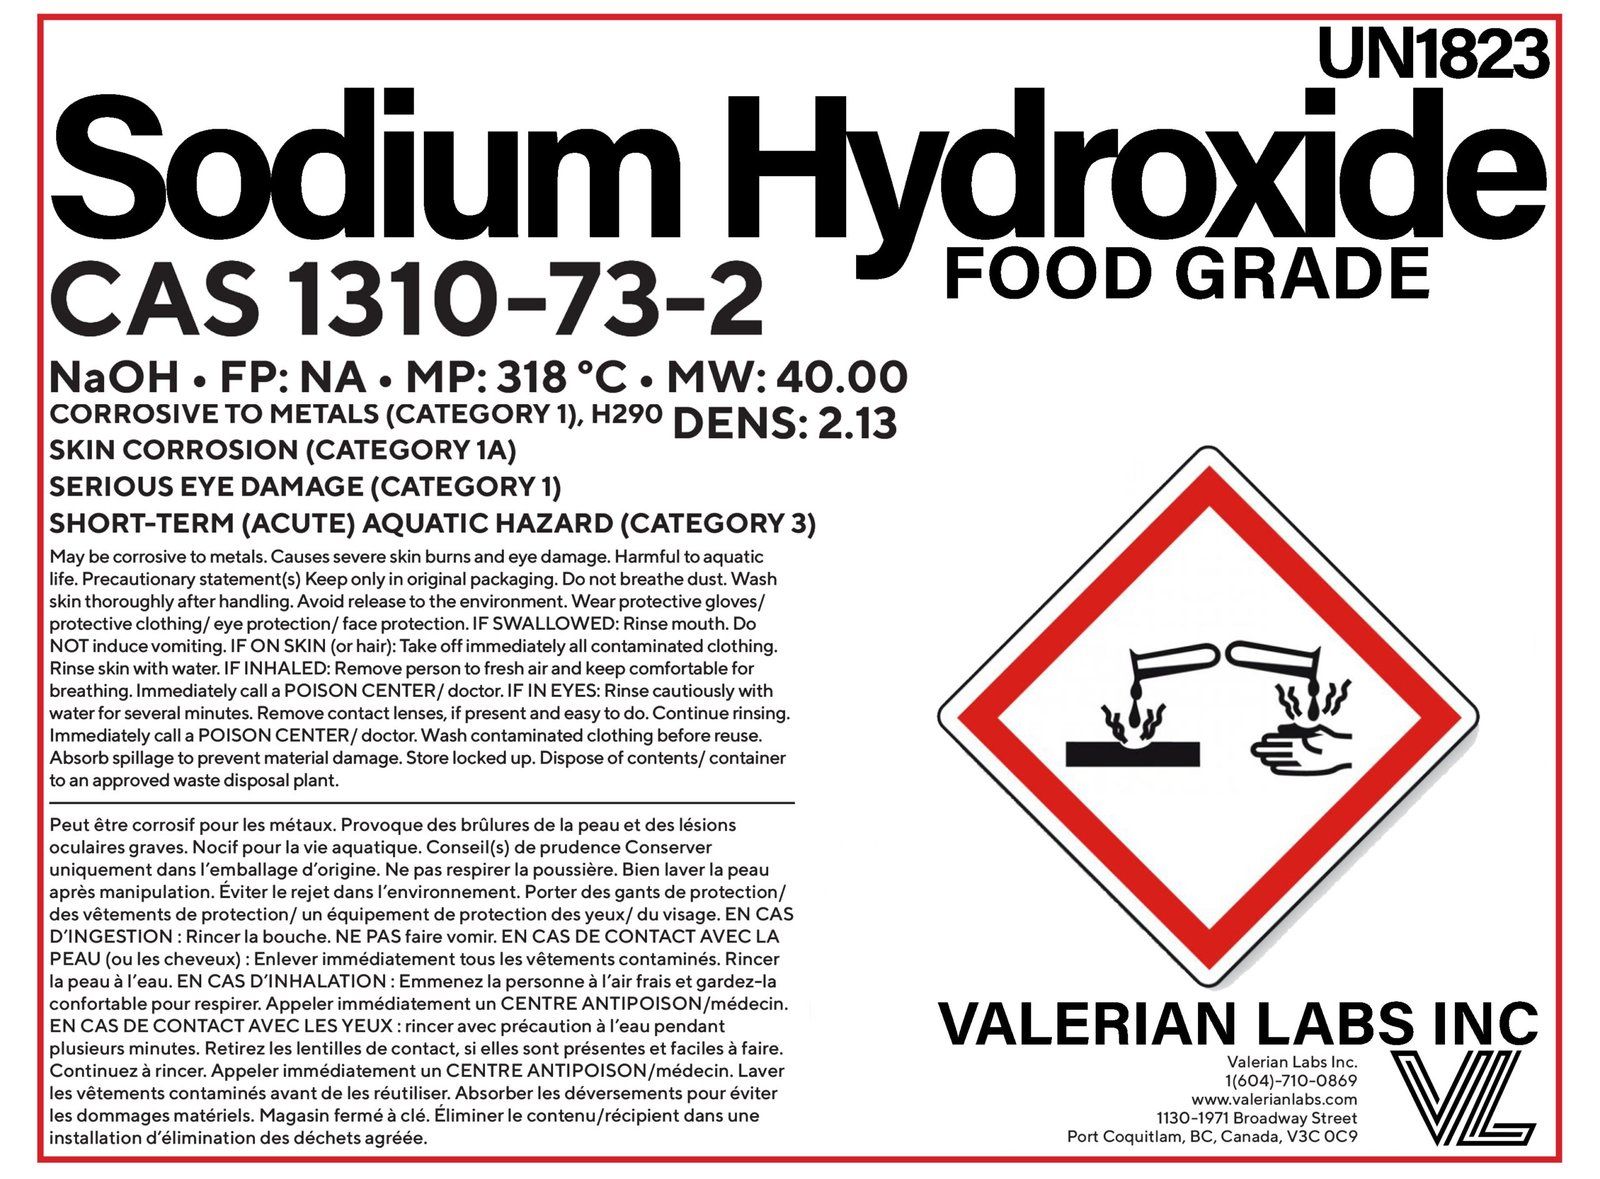 Sodium Hydroxide Food Grade 